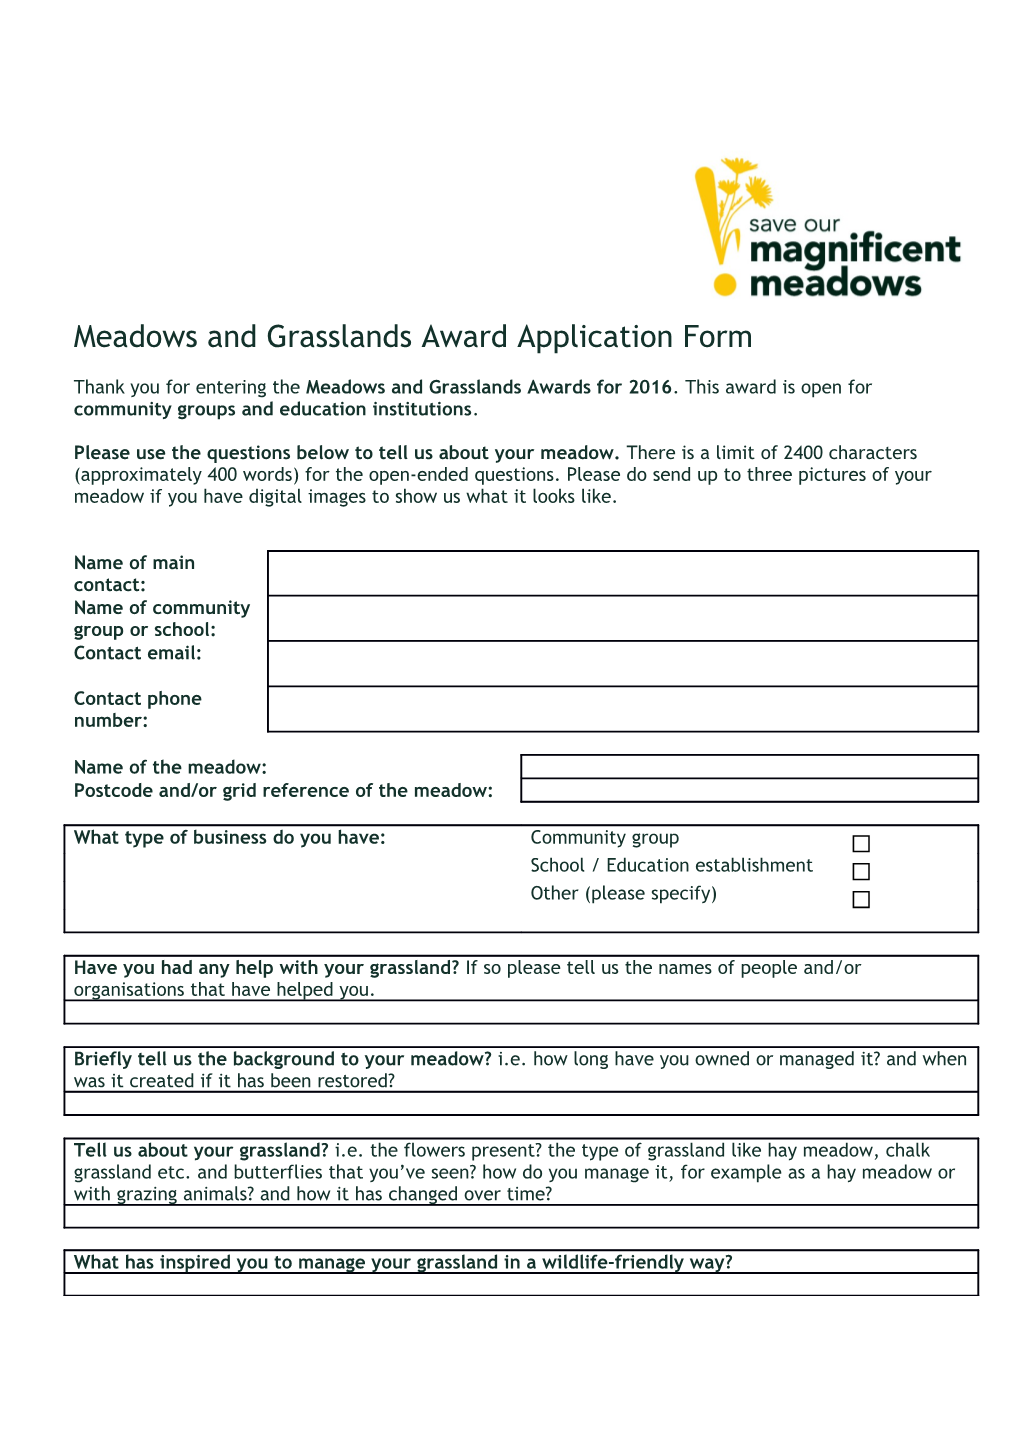 Meadows and Grasslands Award Application Form